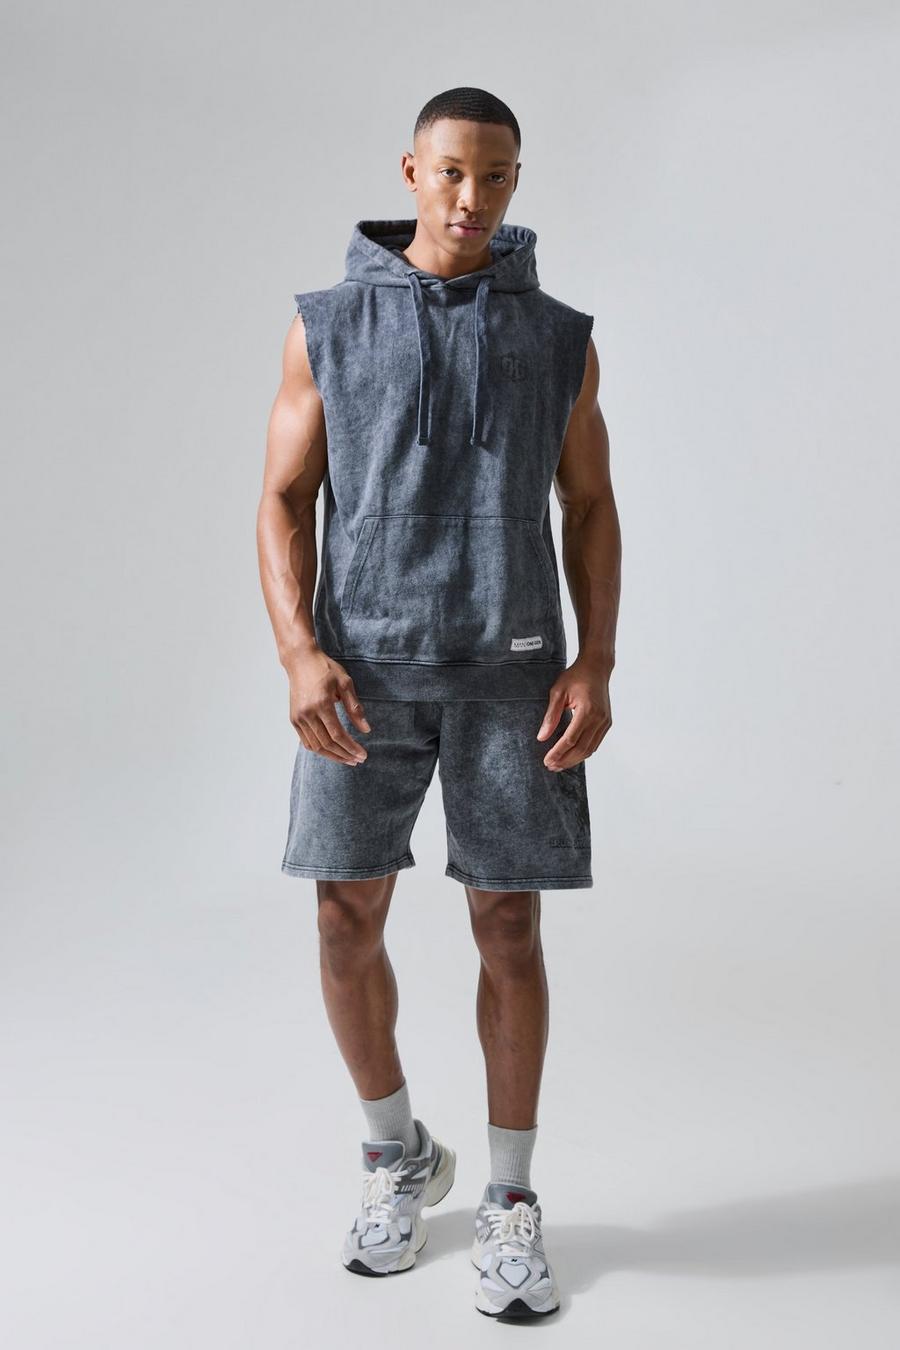 Man Active X Og ärmelloser Trainingsanzug mit Kapuze, Charcoal